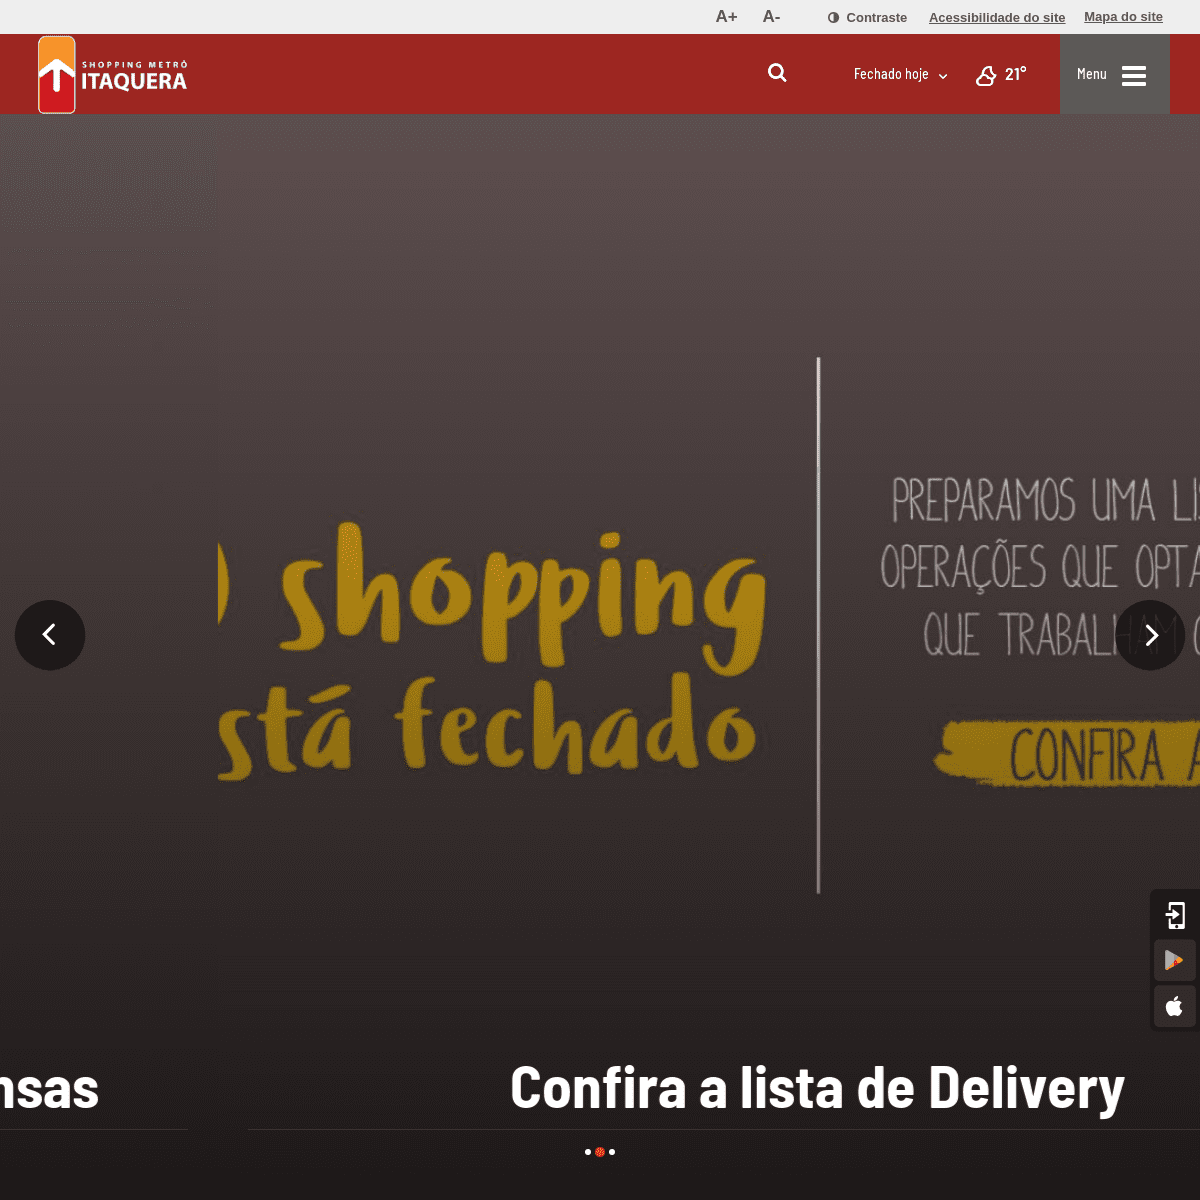 A complete backup of shoppingitaquera.com.br